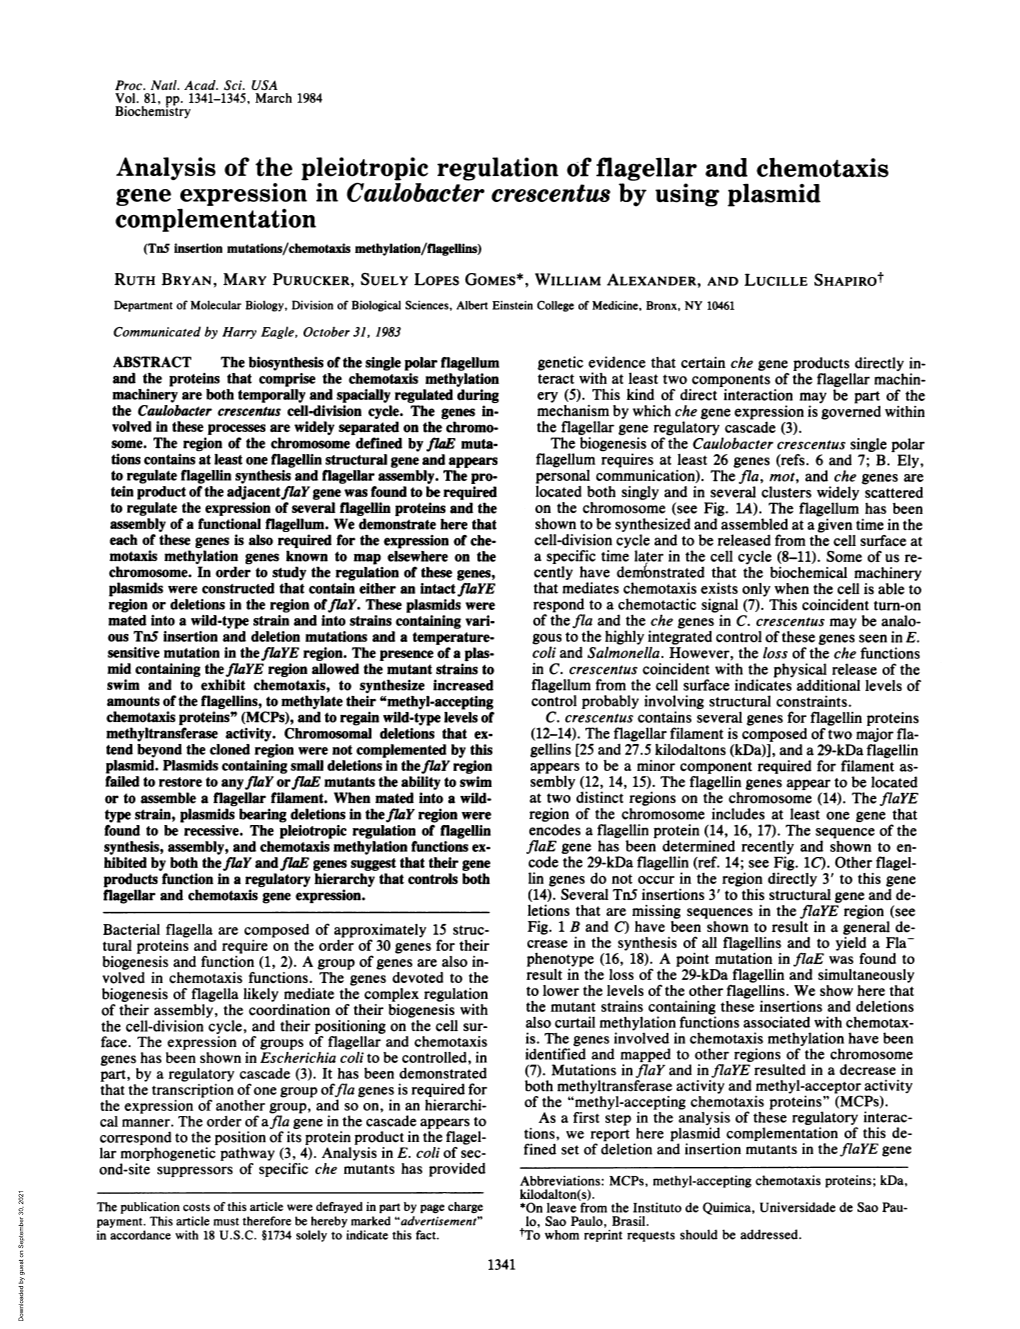 Analysis of the Pleiotropic Regulation of Flagellar and Chemotaxis Gene